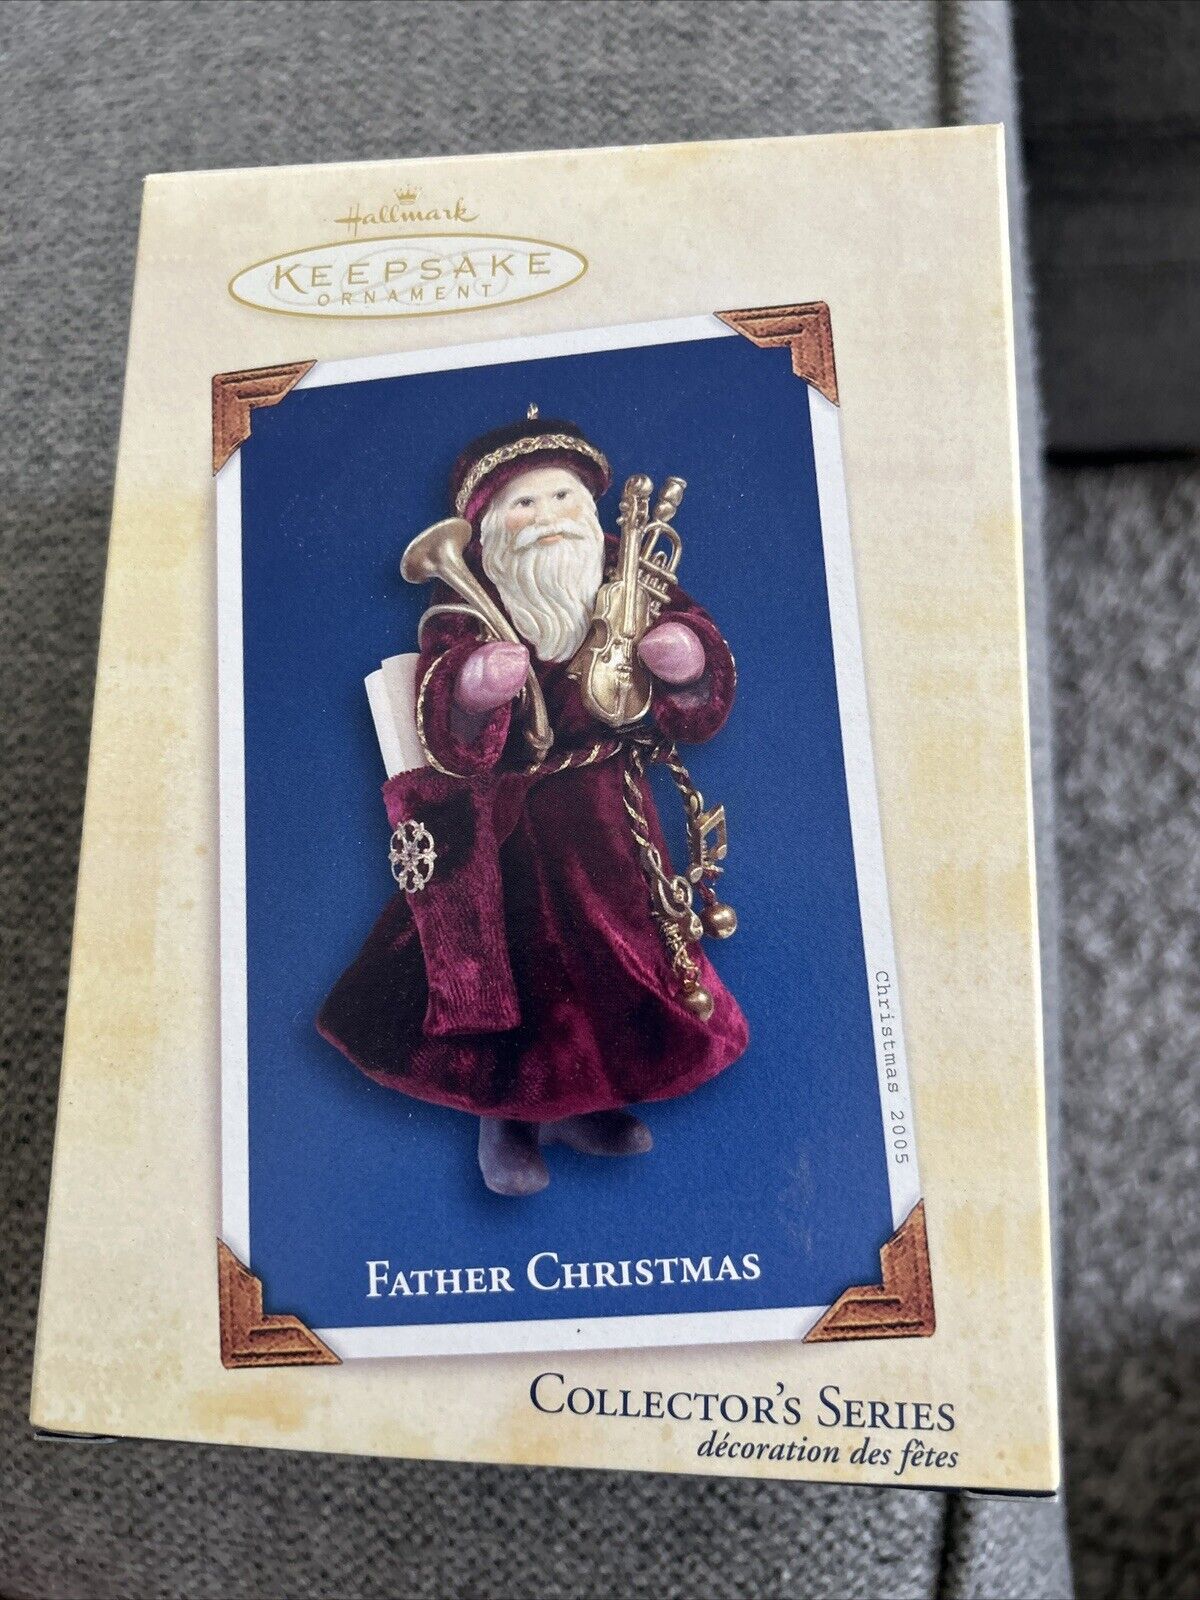 Father Christmas 2005 Hallmark Keepsake Ornament Collectors Series #2